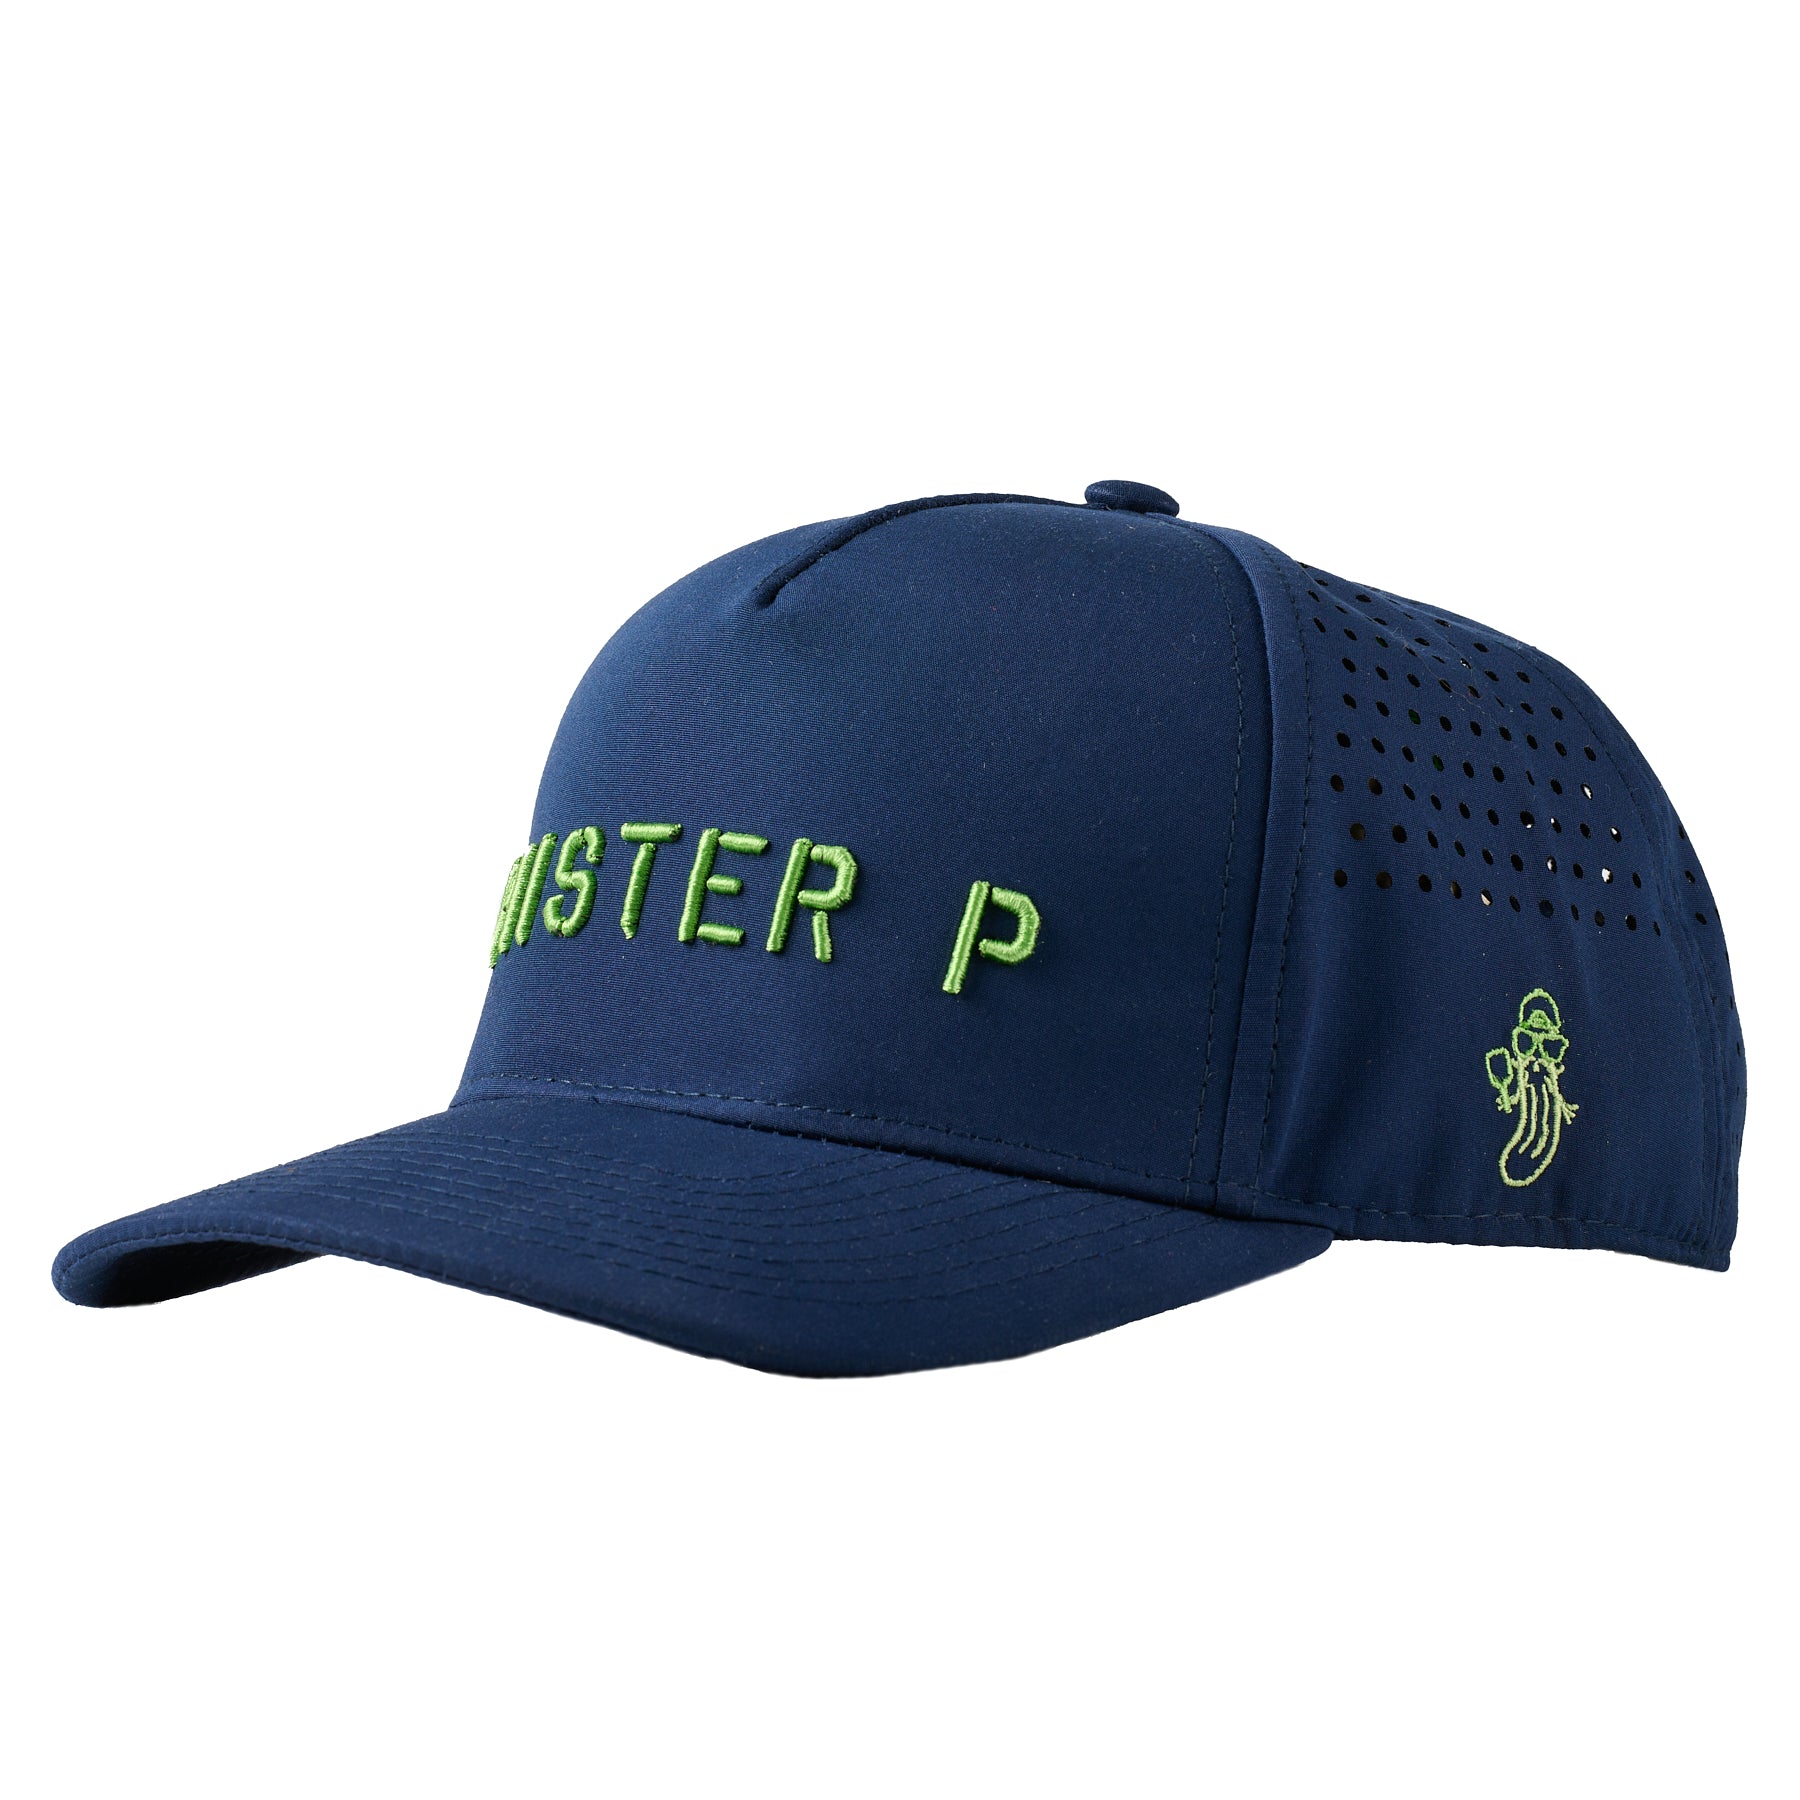 MISTER P Performance Hat (Navy/Green)